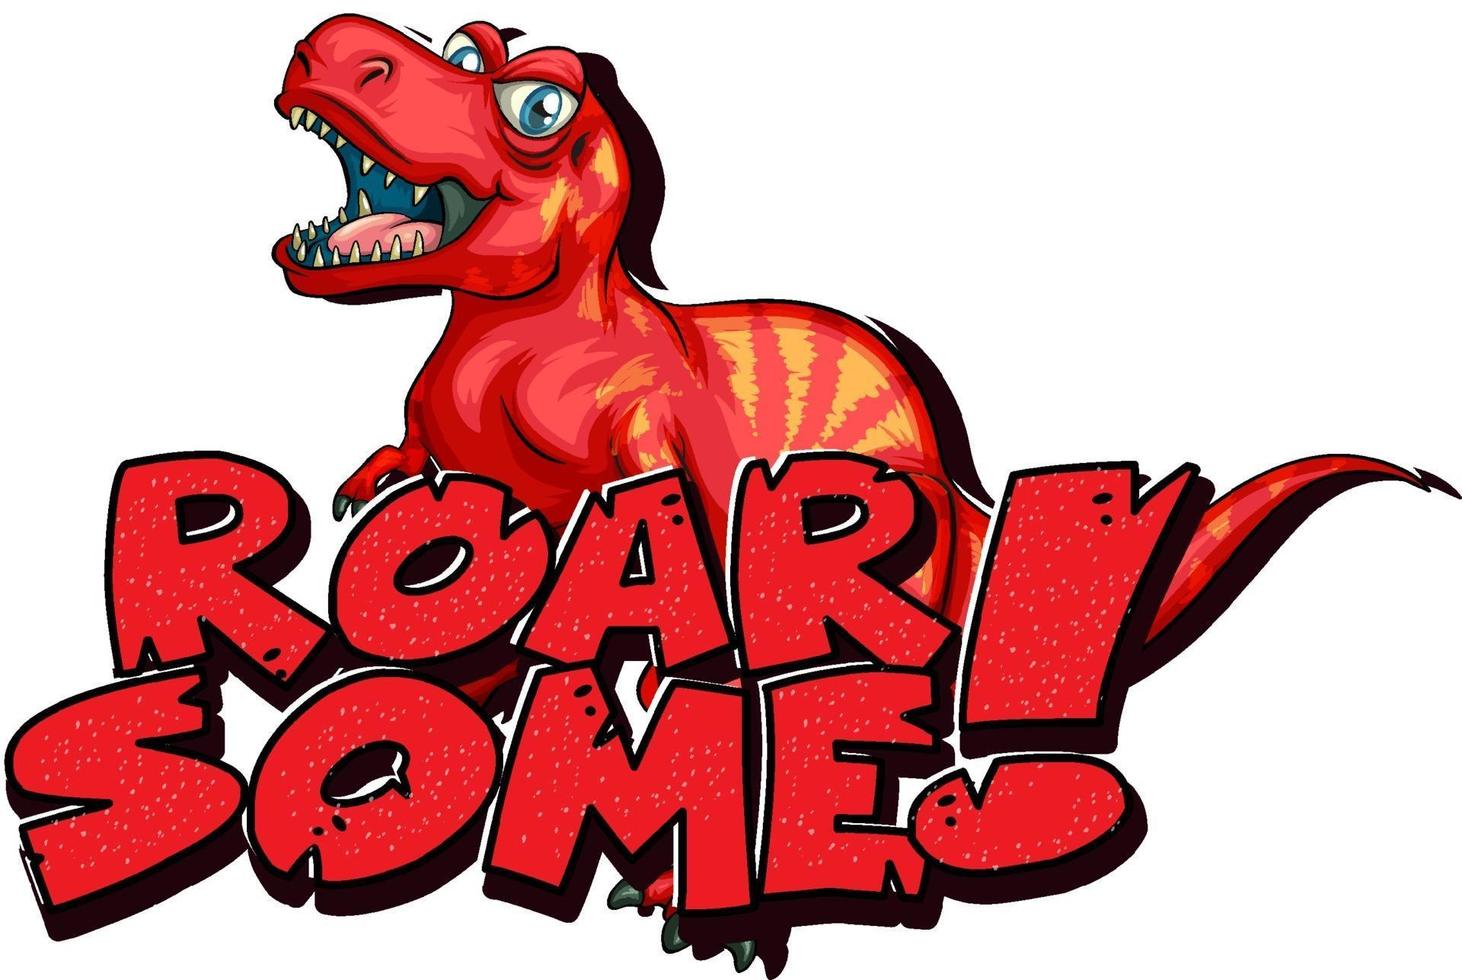 Dinosaur cartoon character with roar font banner vector